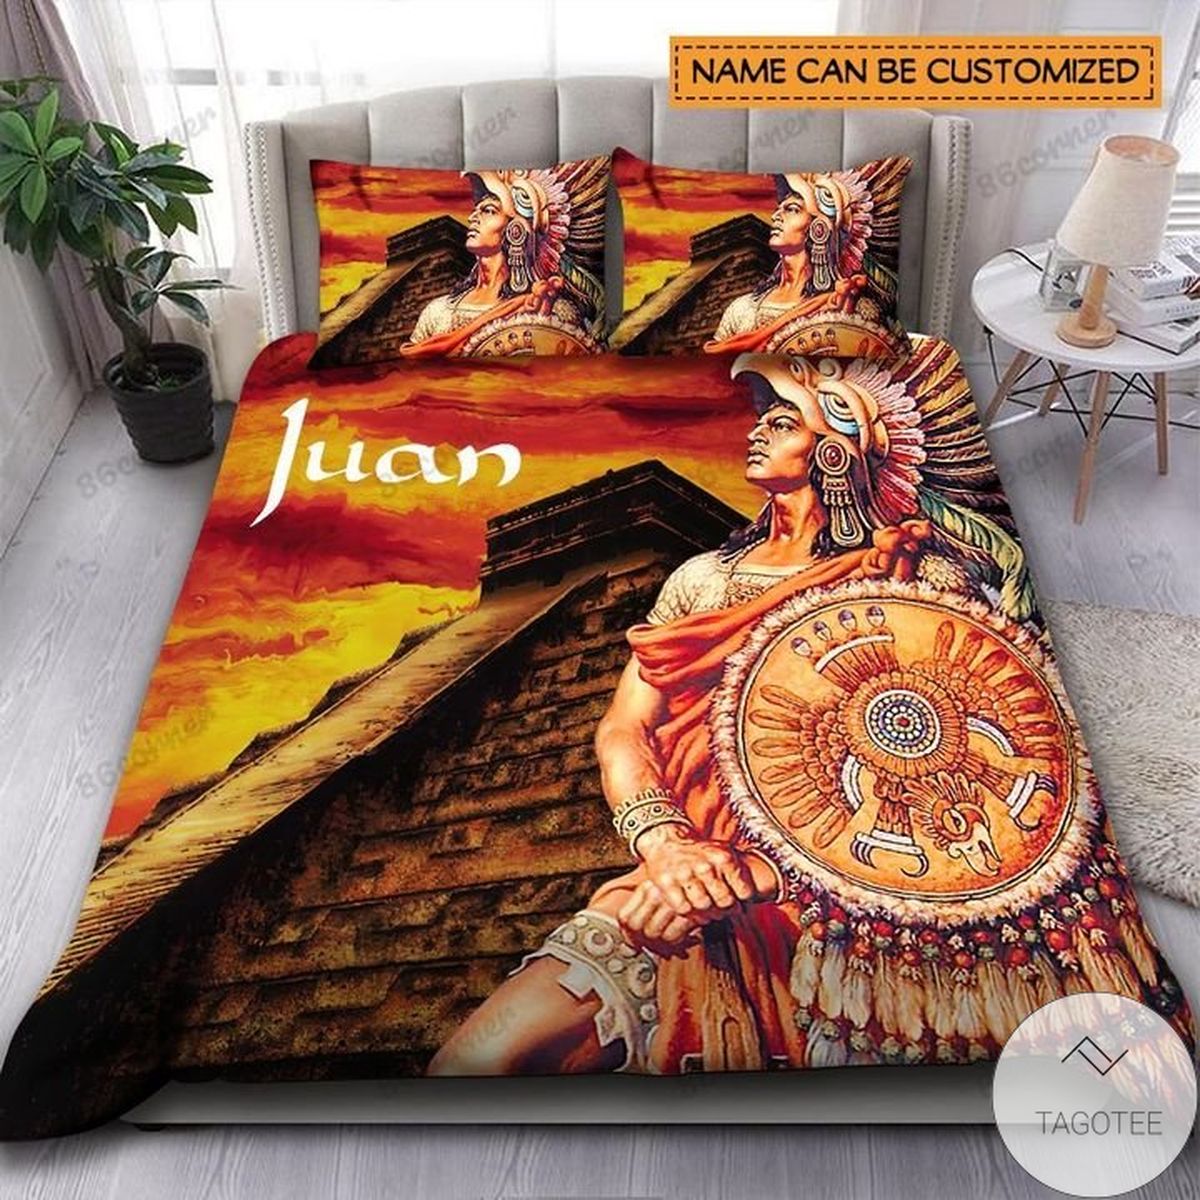 Personalized Aztec Warrior Bedding Set